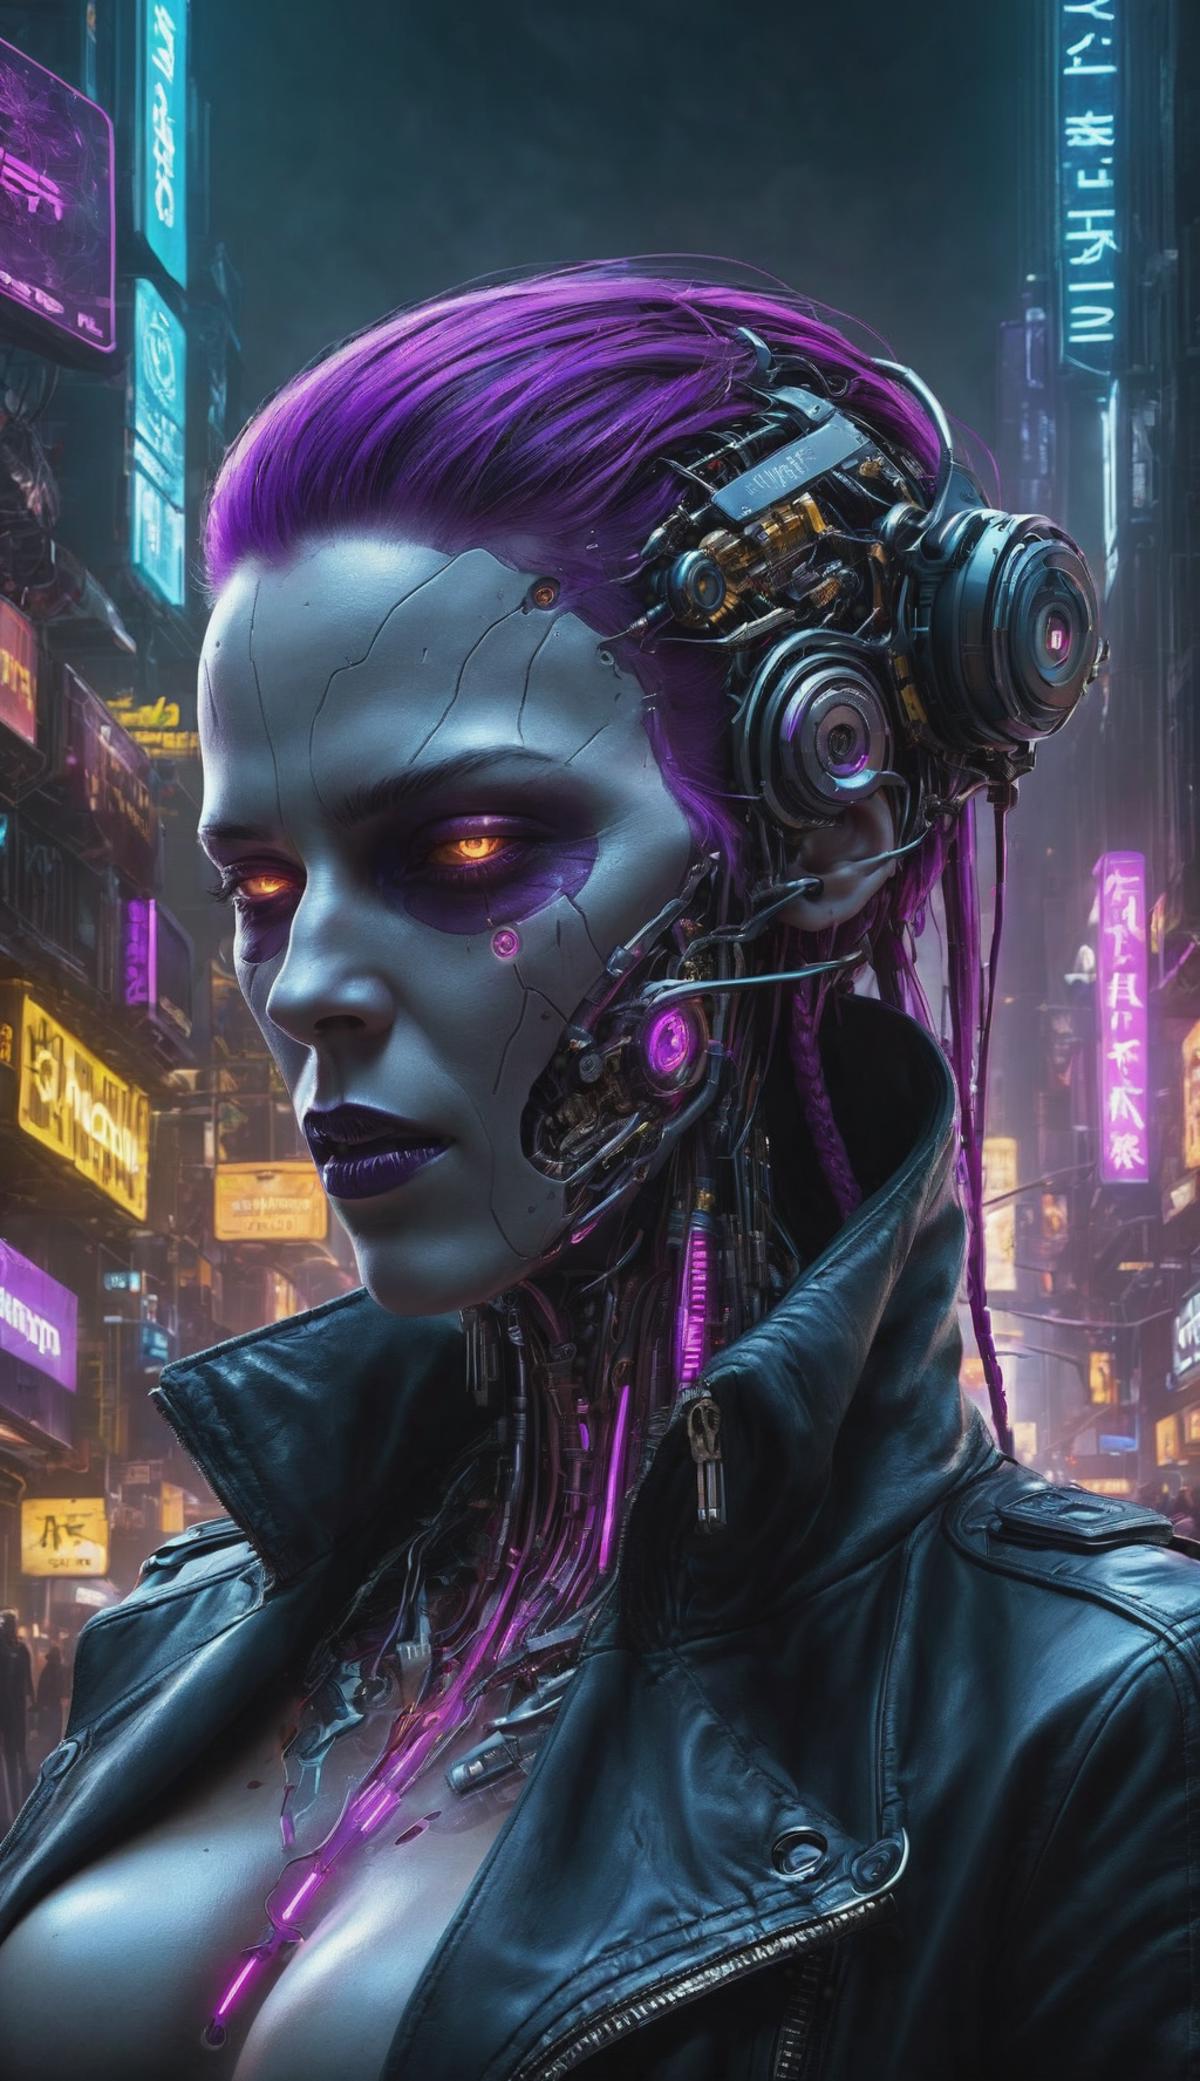 Futuristic Cyborg Woman with Purple Hair and Purple Makeup.